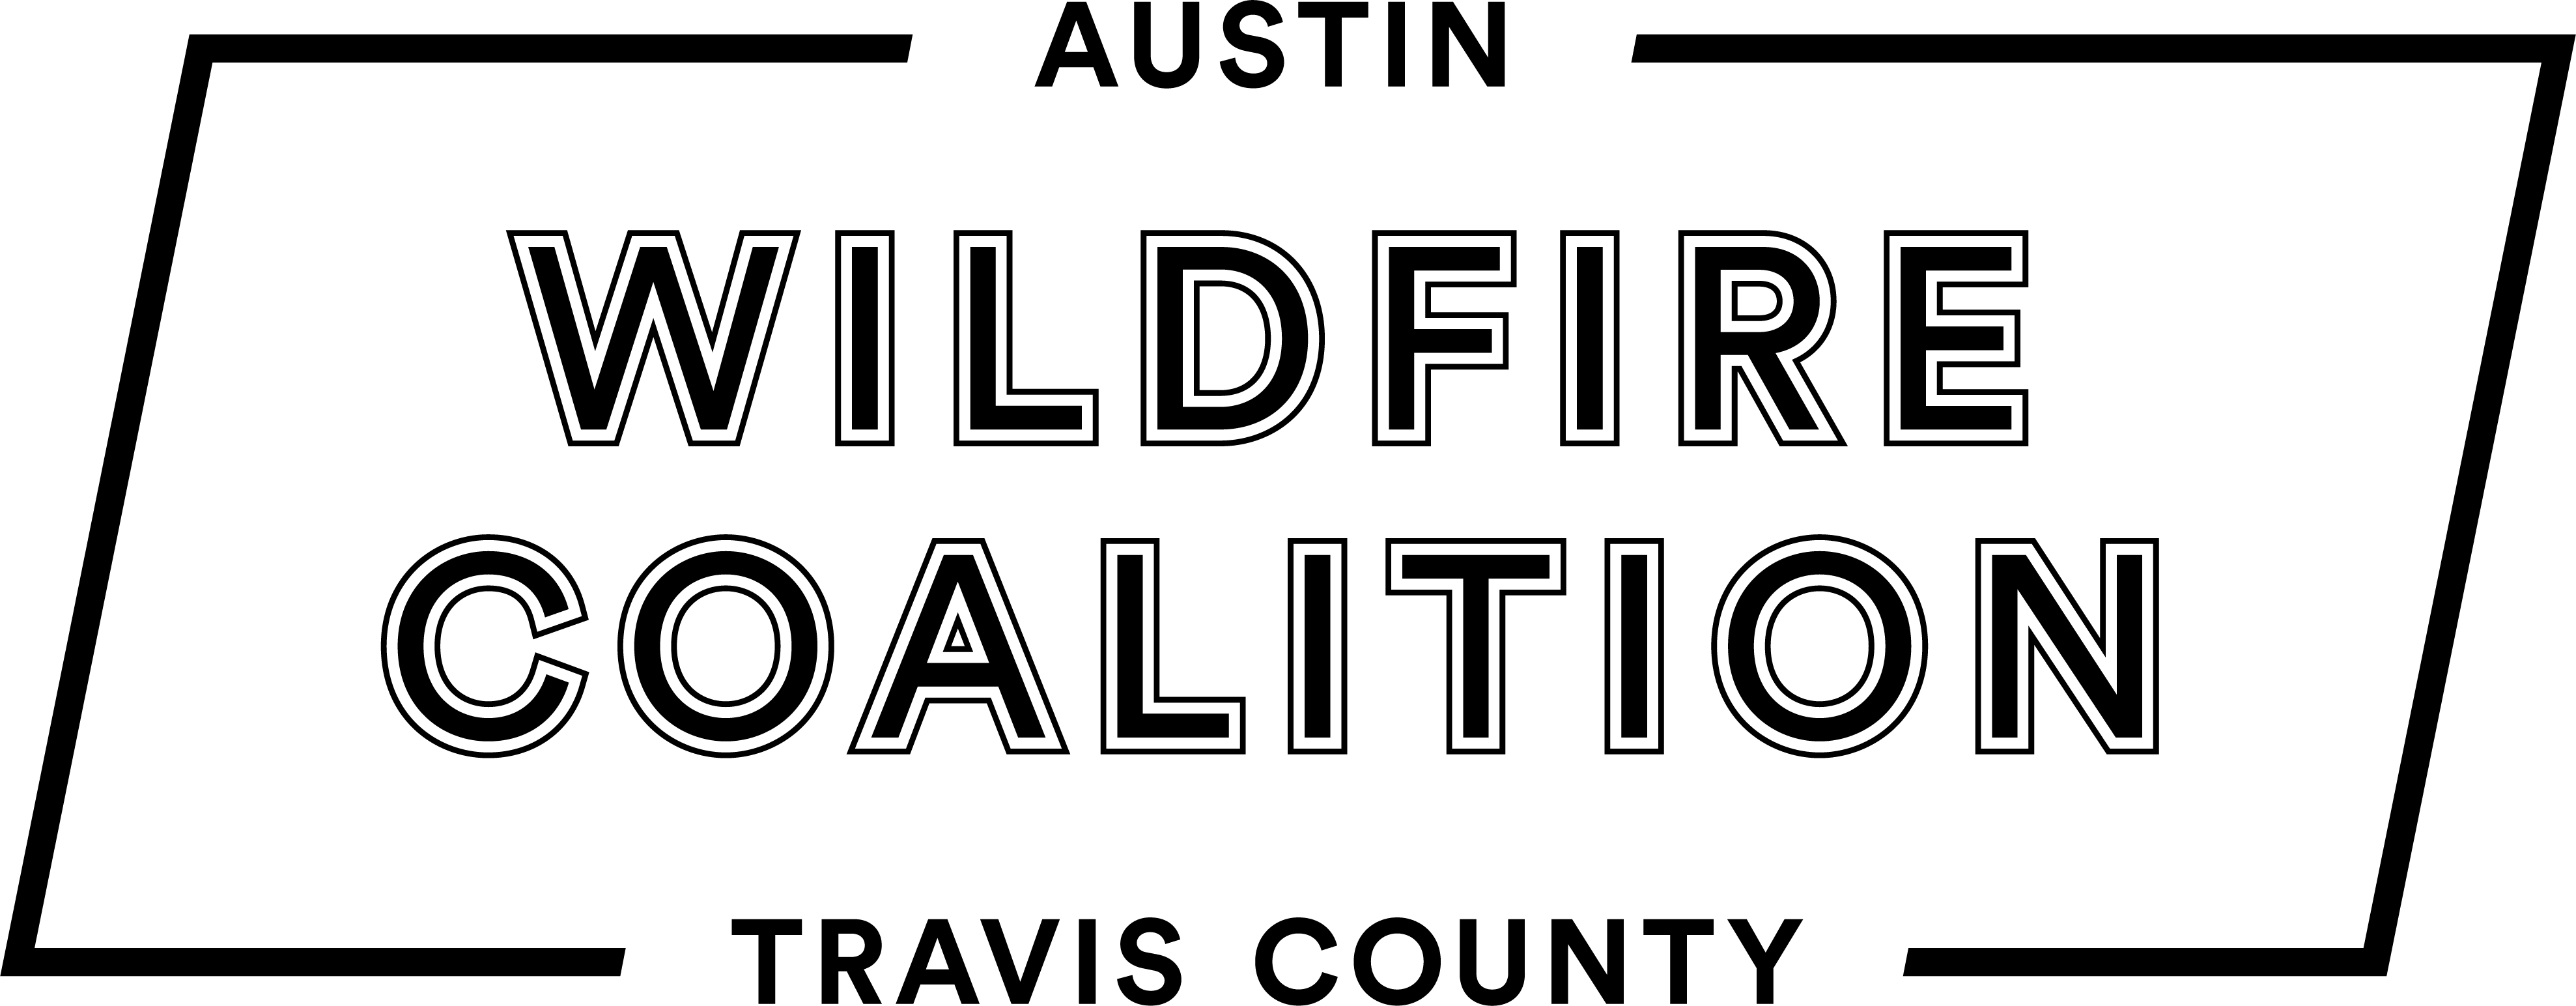 wildfire coalition logo black